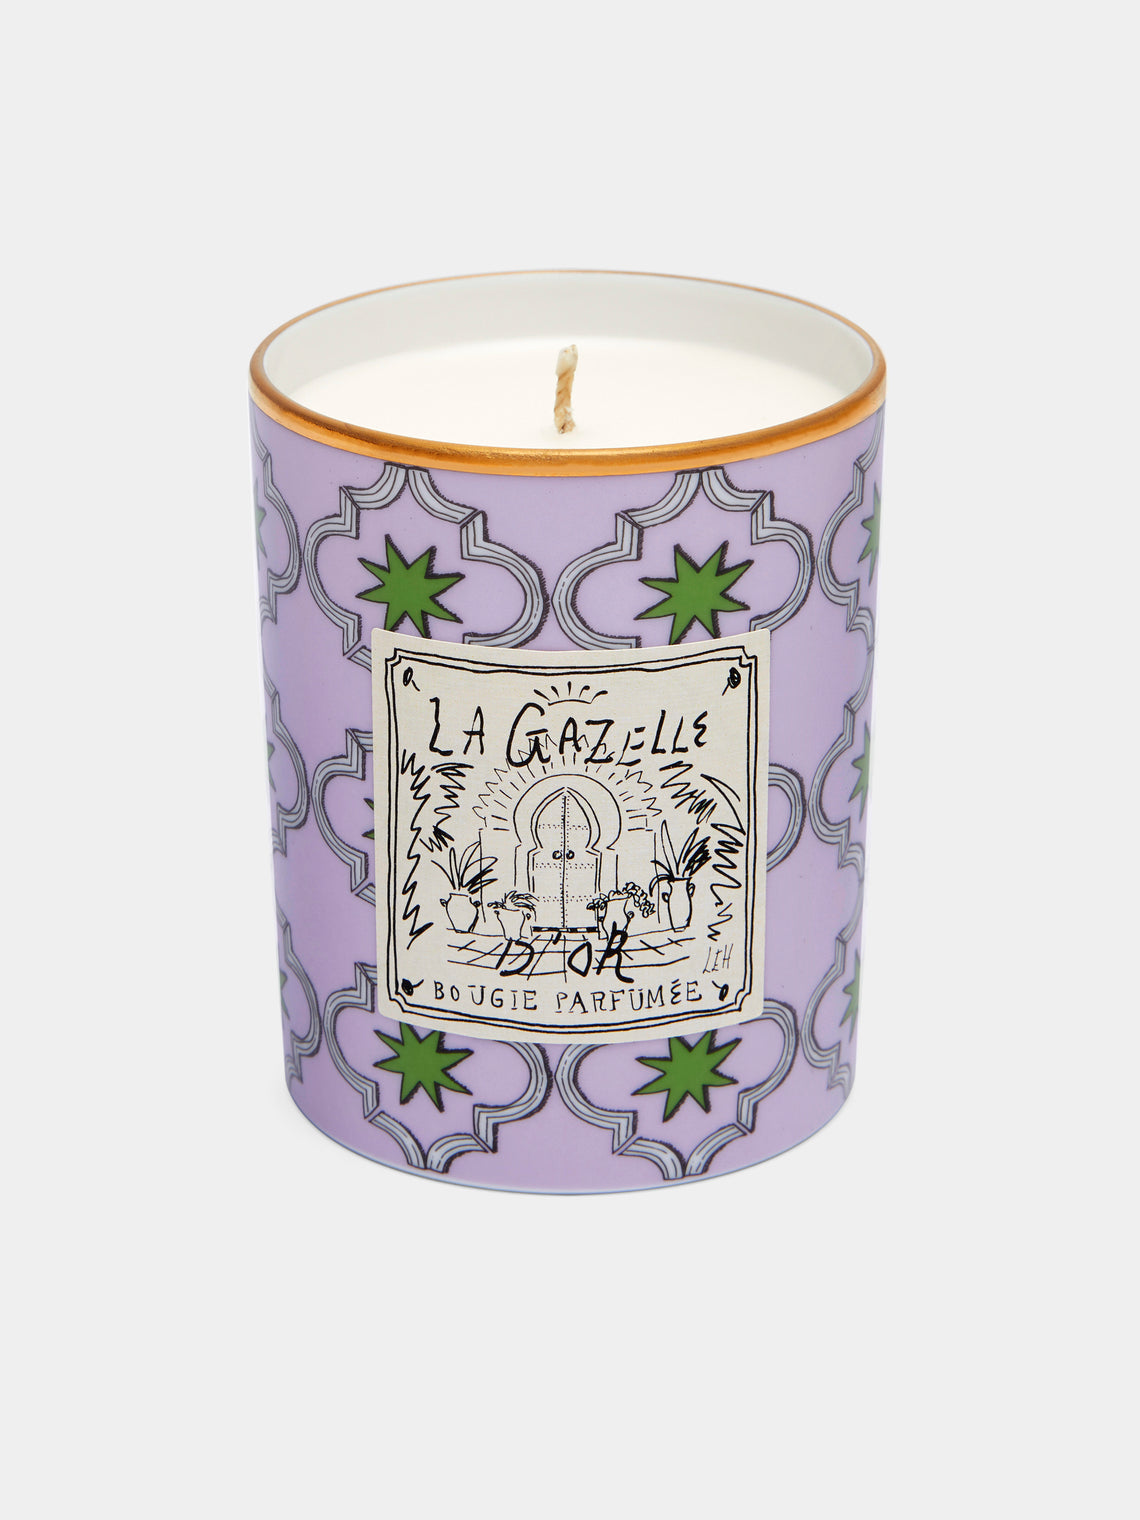 Ginori 1735 - Profumi Luchino La Gazelle D'or Porcelain Candle - Purple - ABASK - 